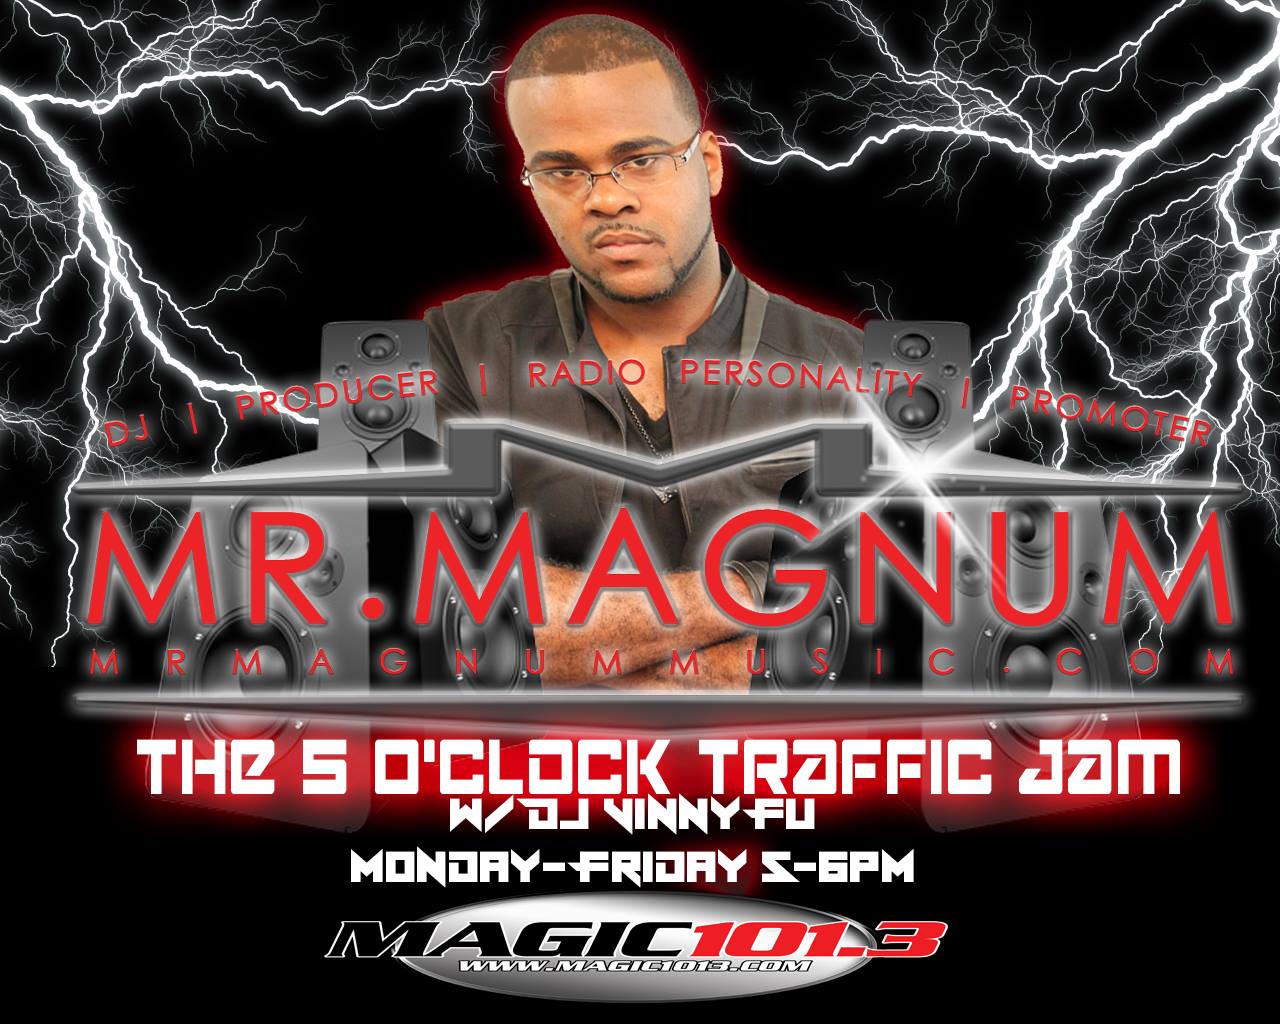 The 5 O’Clock Traffic Jam 1/27/2017  on Magic 101.3